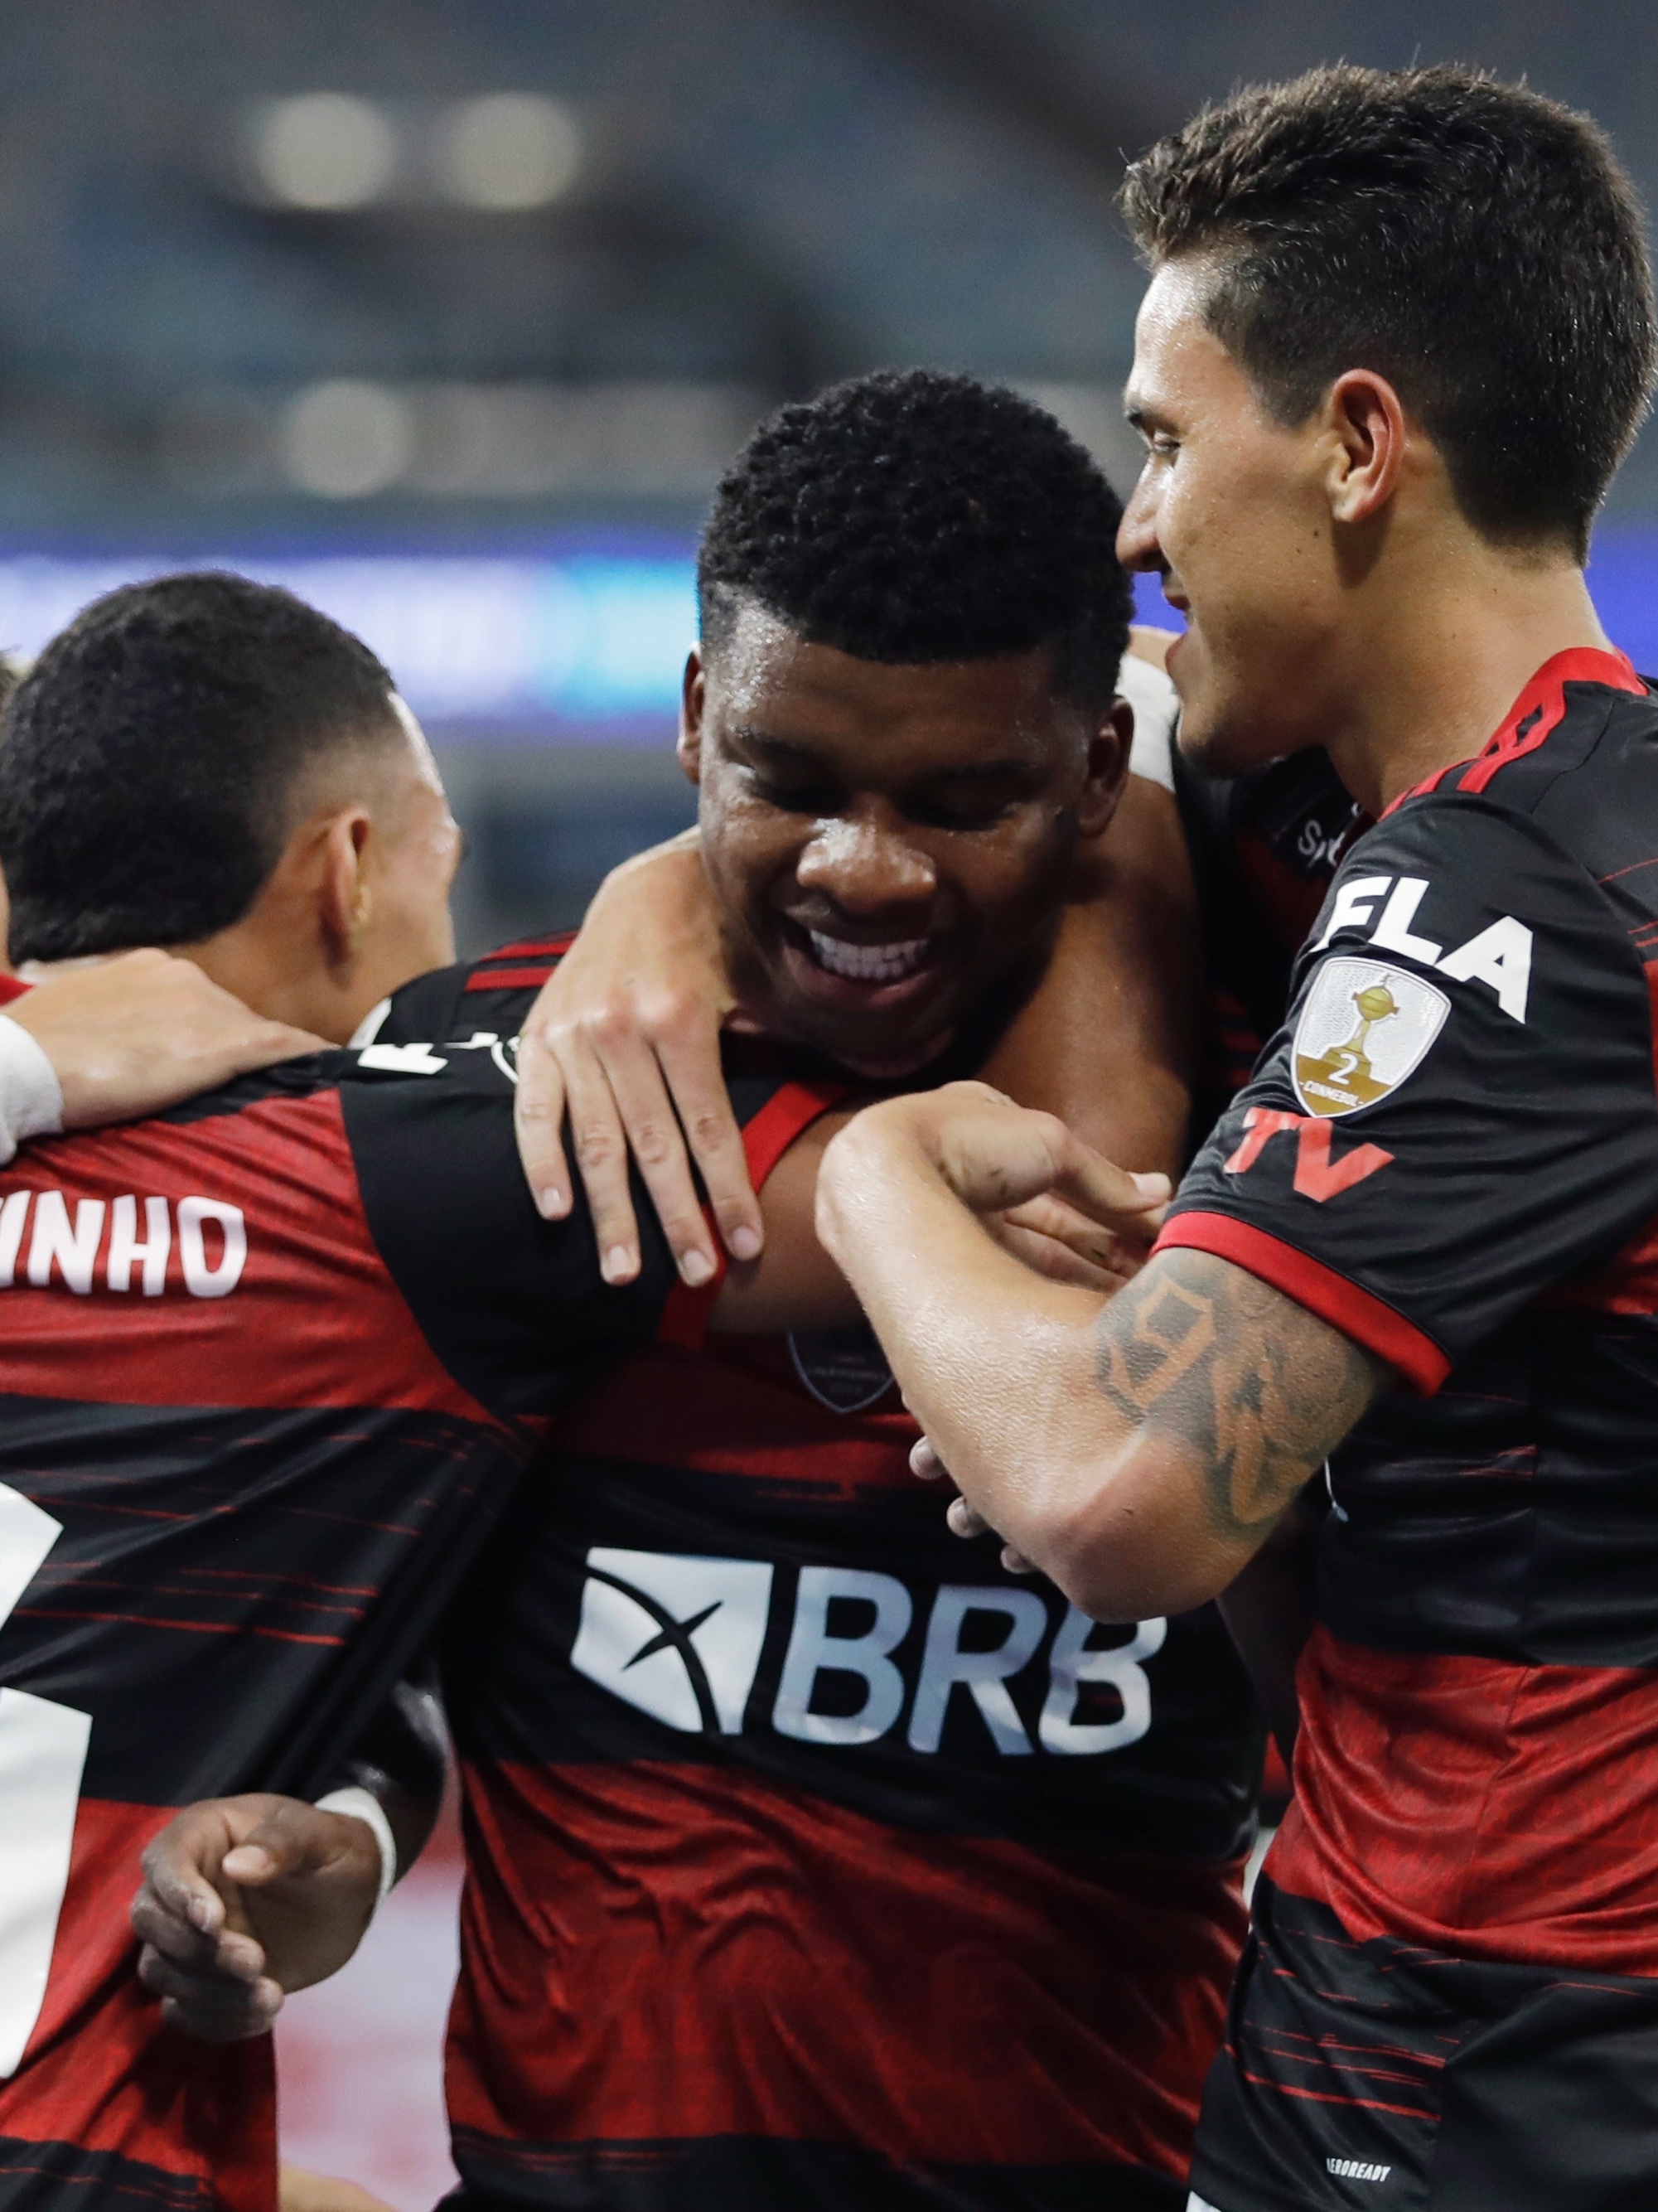 Flamengo deverá improvisar Isla de zagueiro contra Del Valle FlaResenha